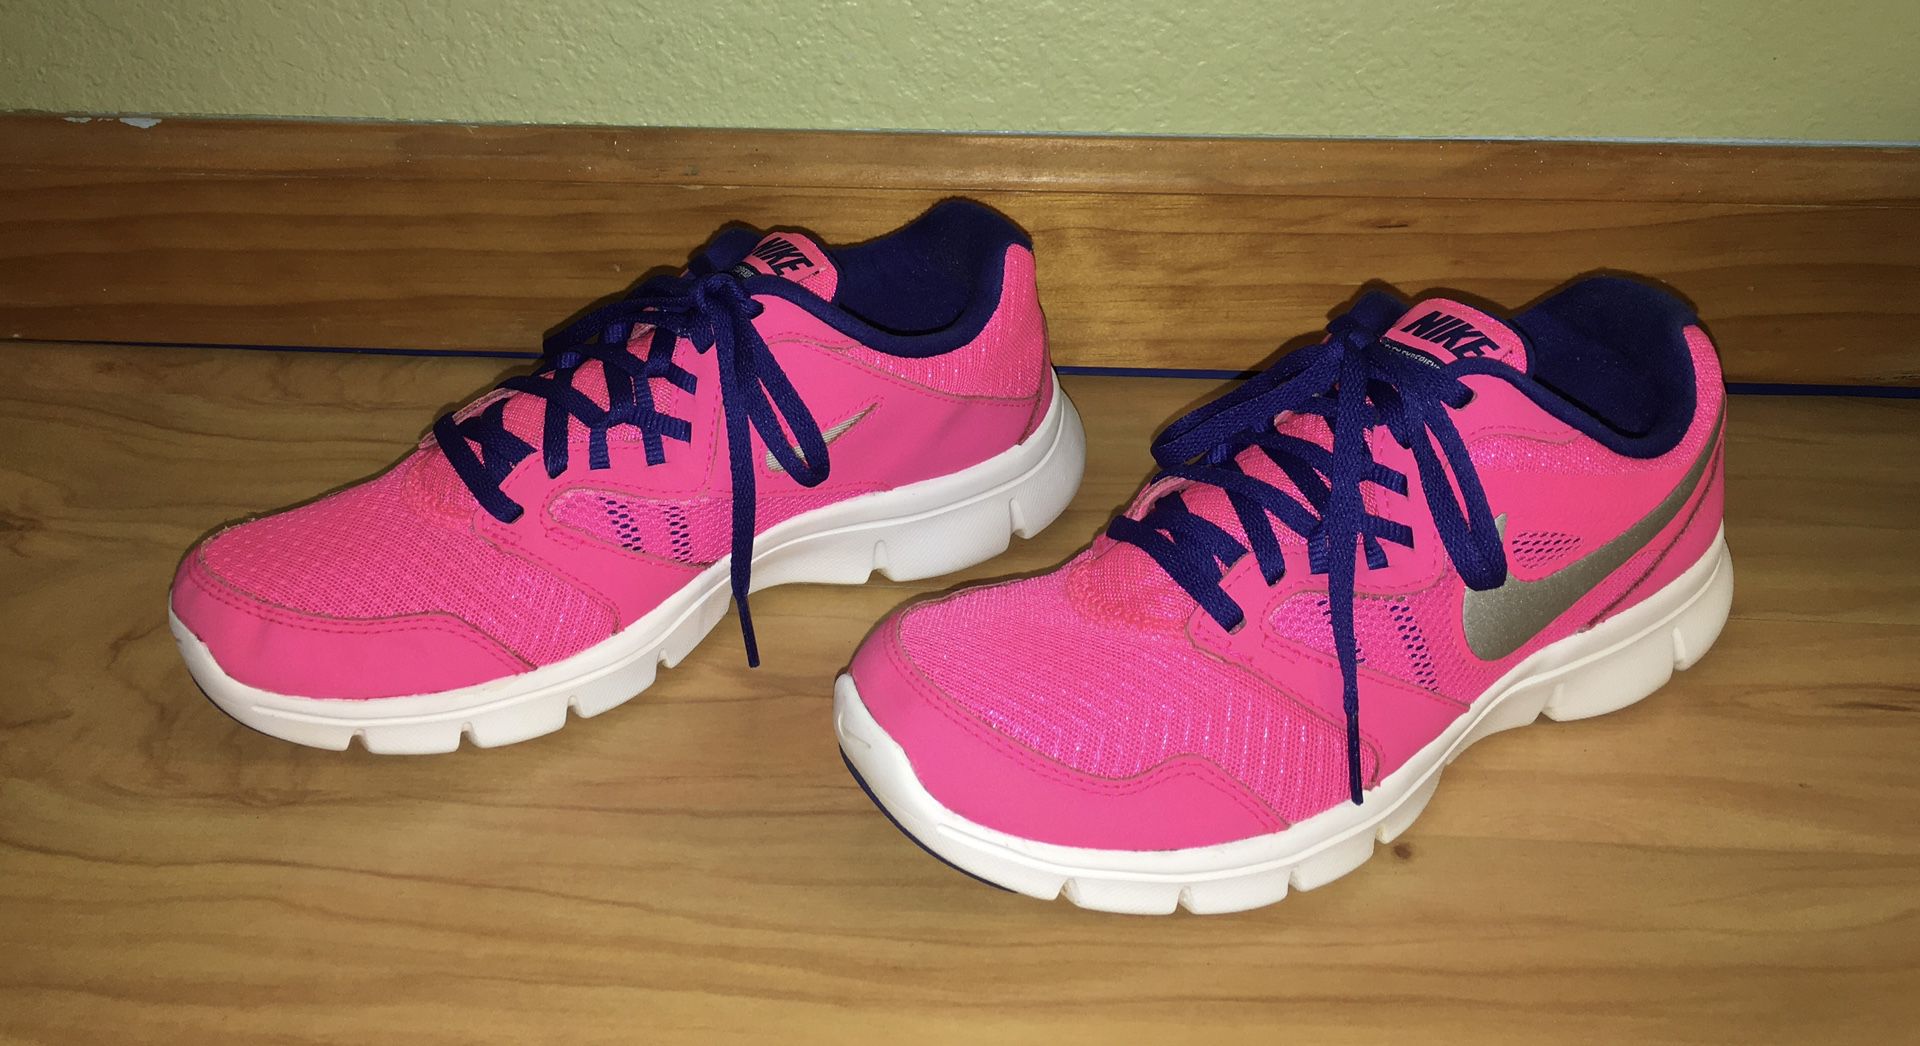 Juniors/ Women’s Nike Flex RN3 Pink Athletic Shoes 6Y